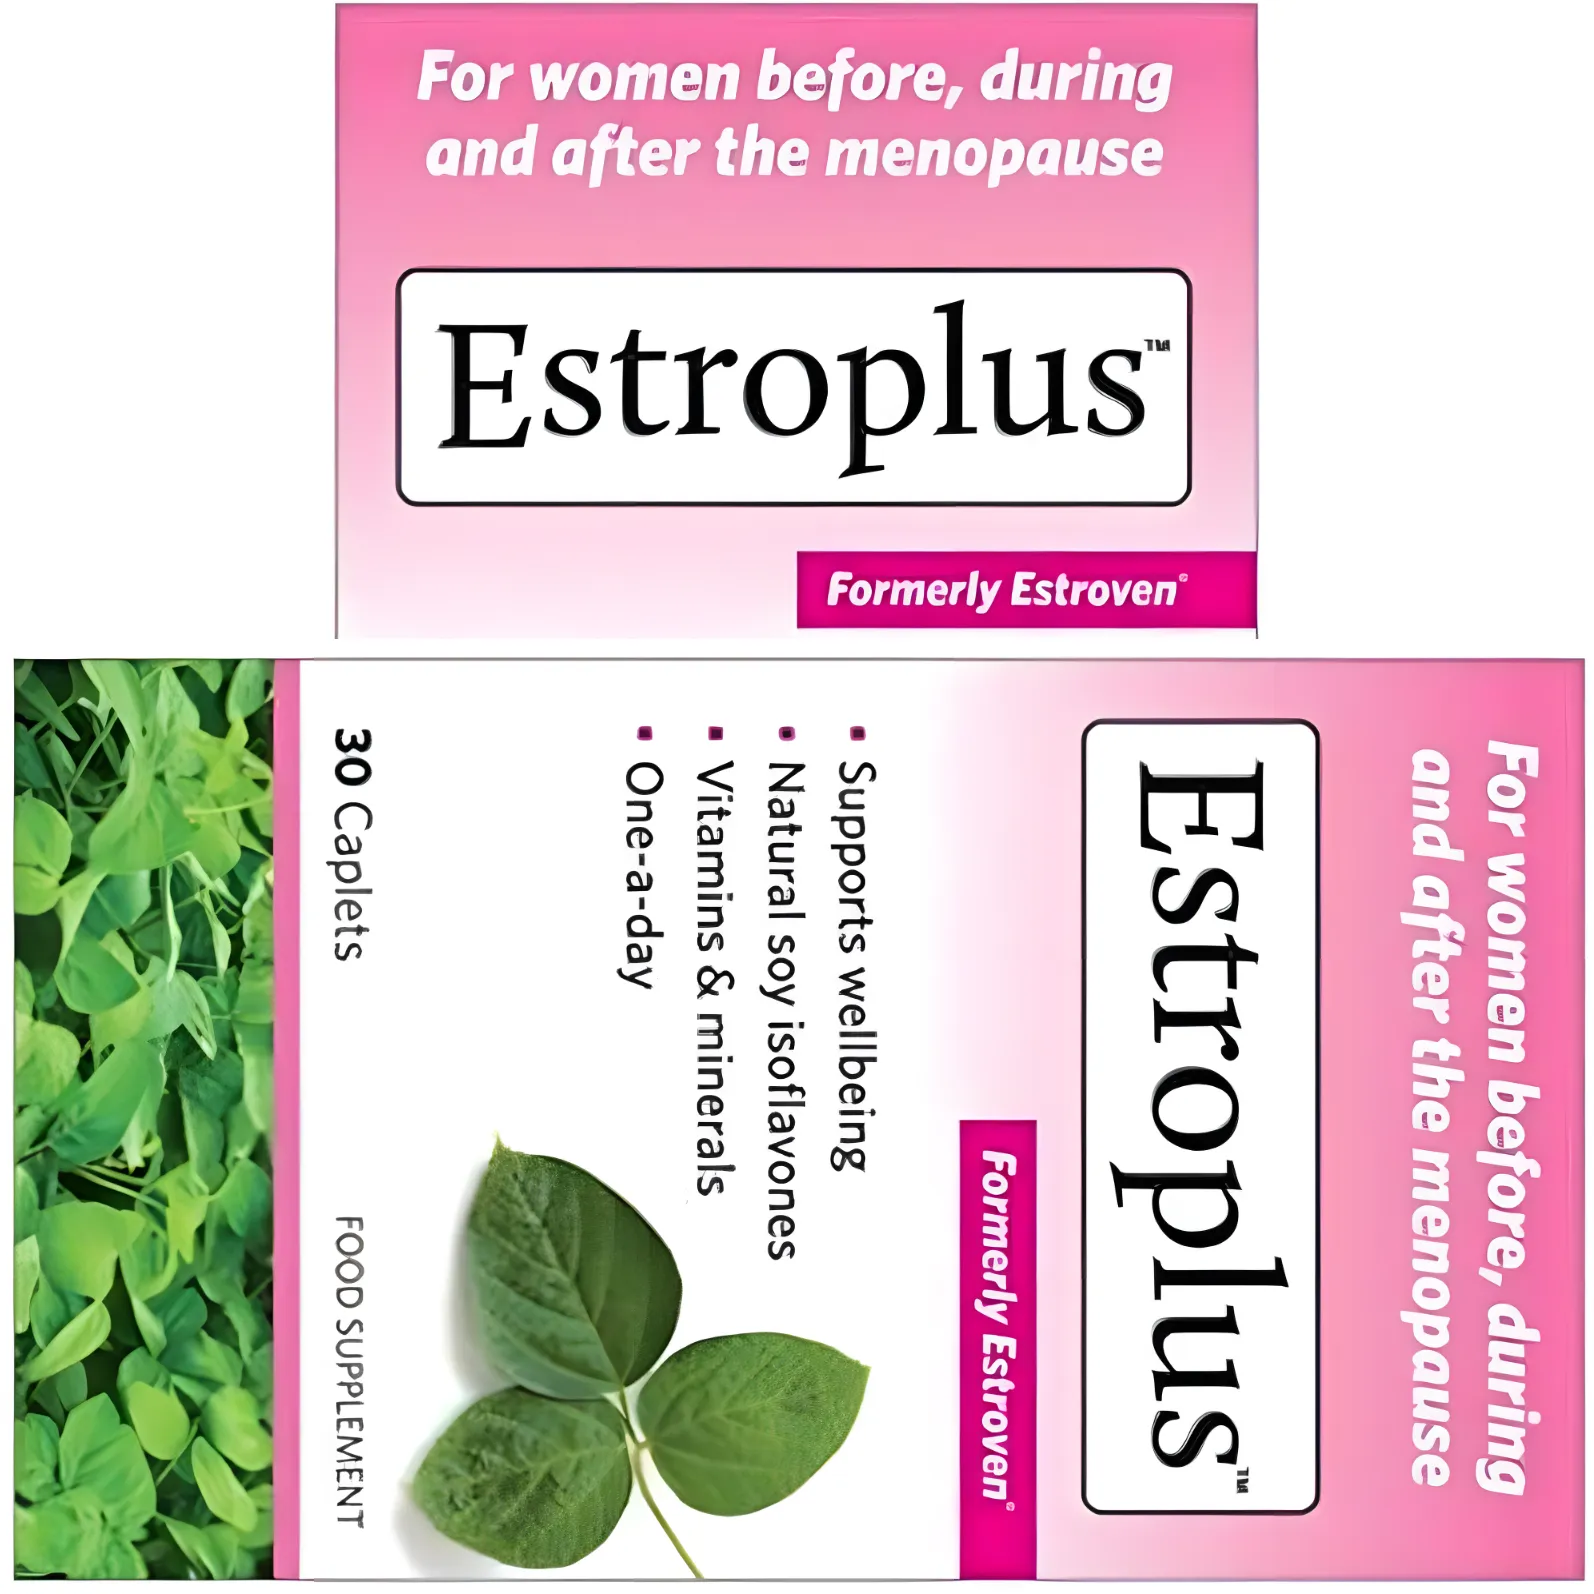 Free Estroplus Menopause Food Supplement